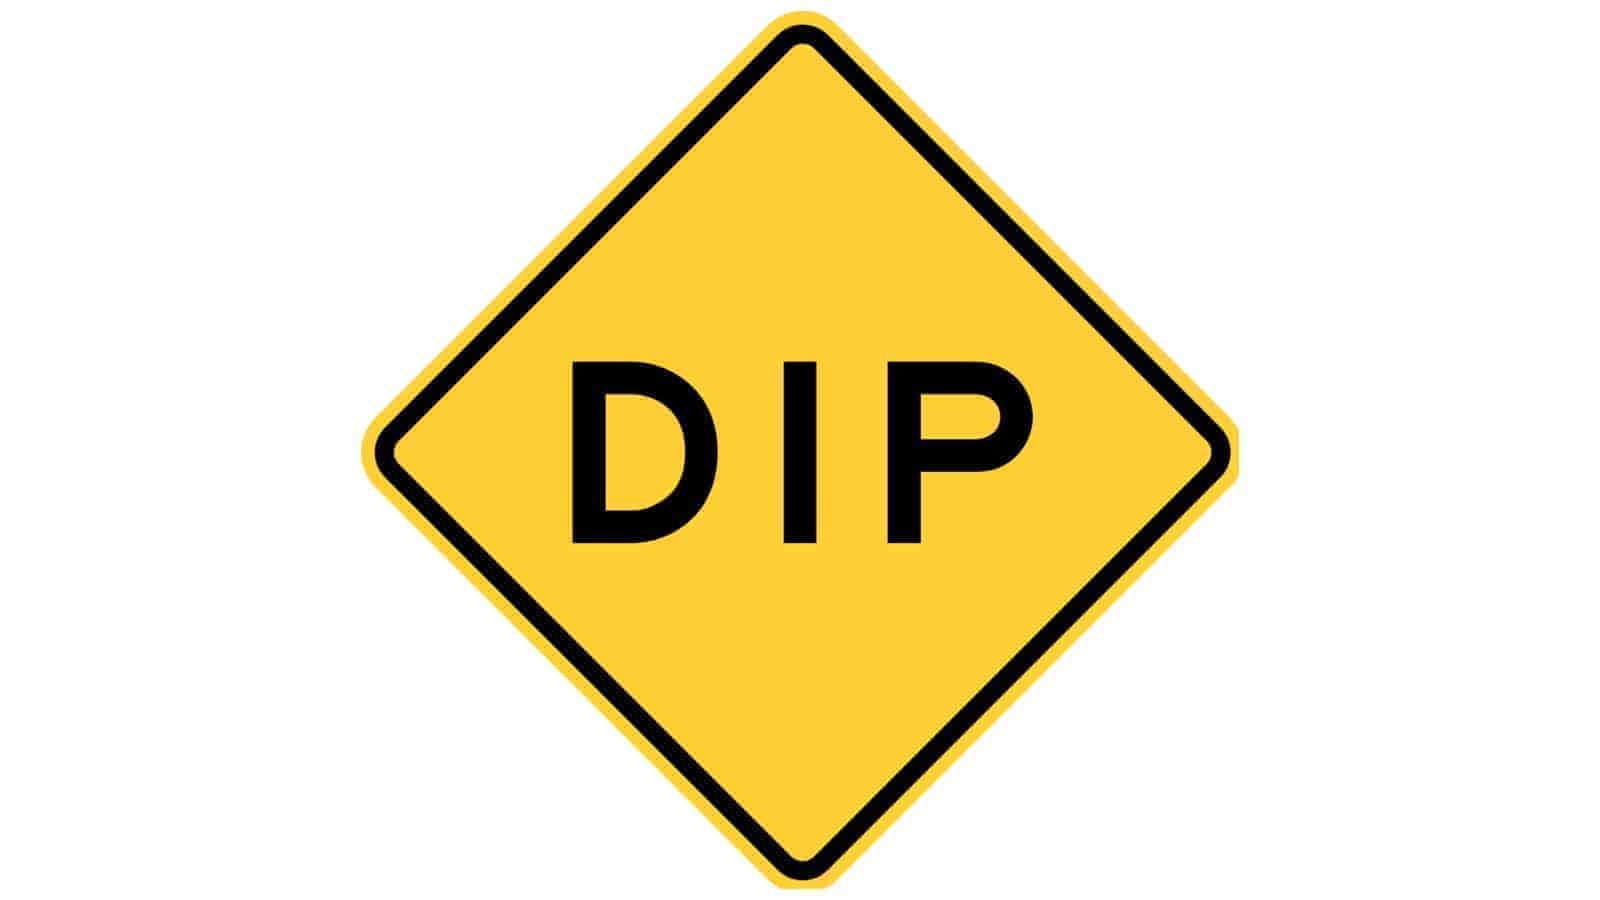 Warning sign Dip Ahead